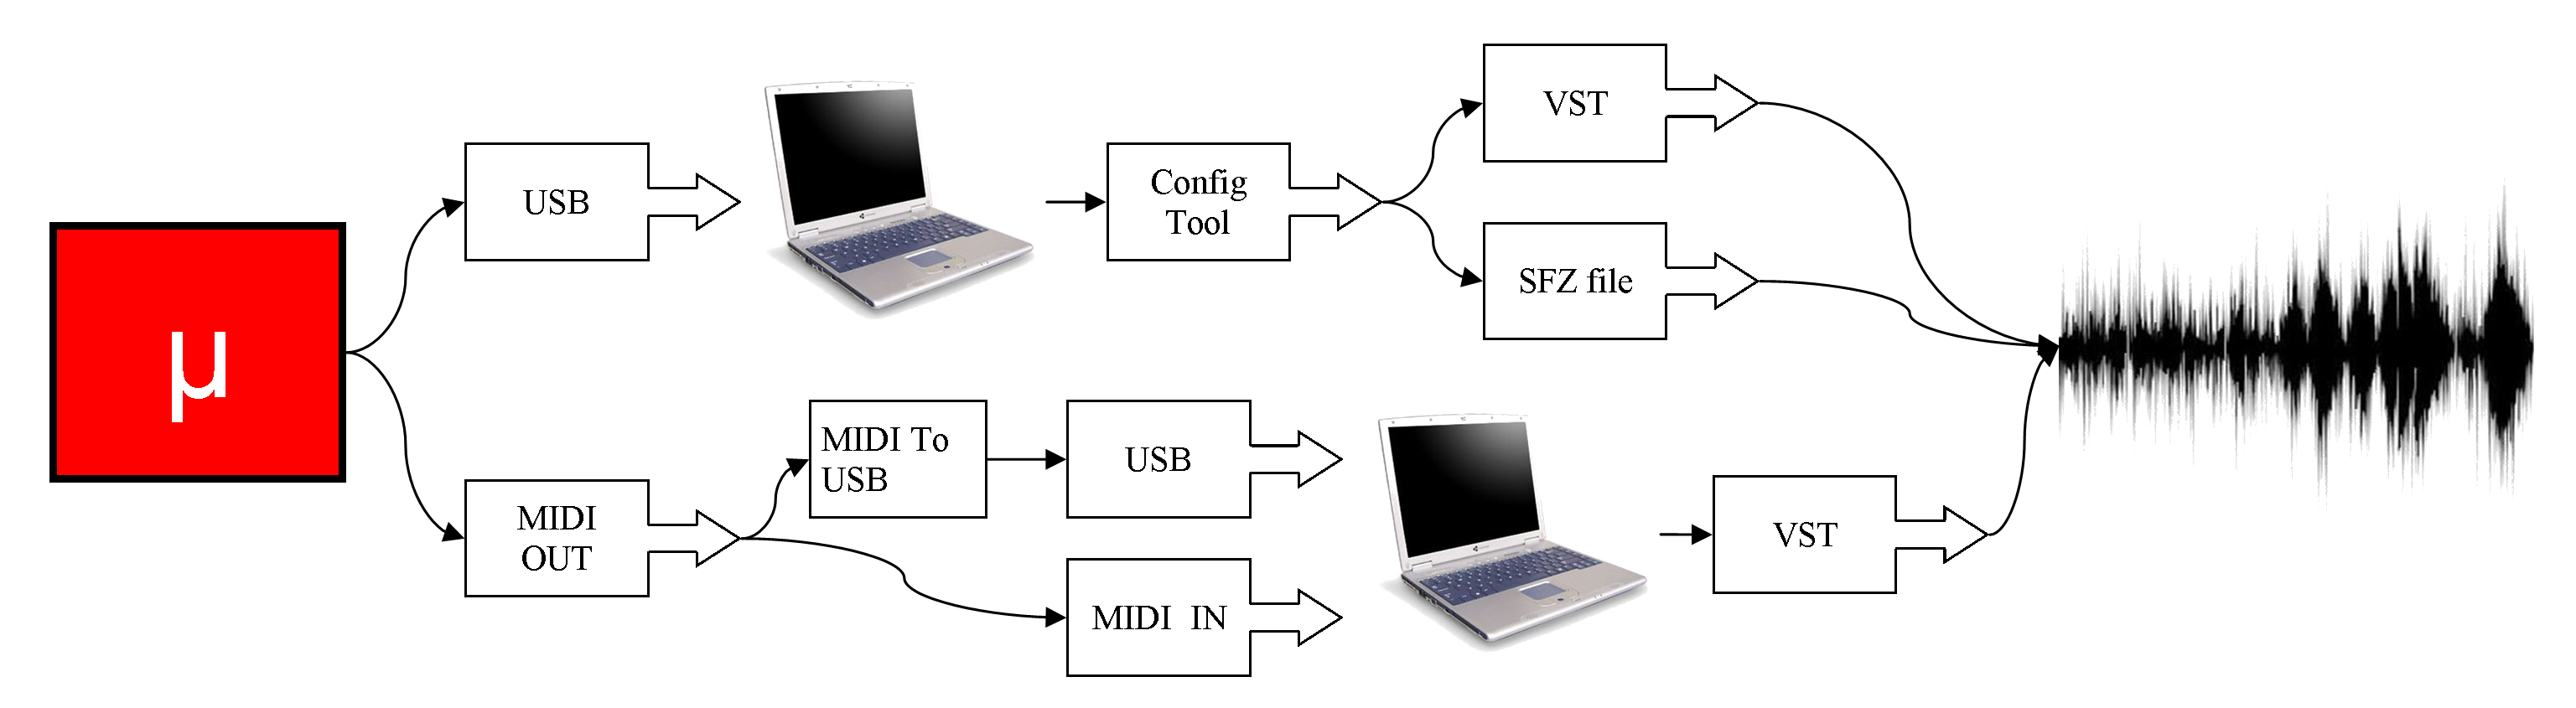 microDrum VST work